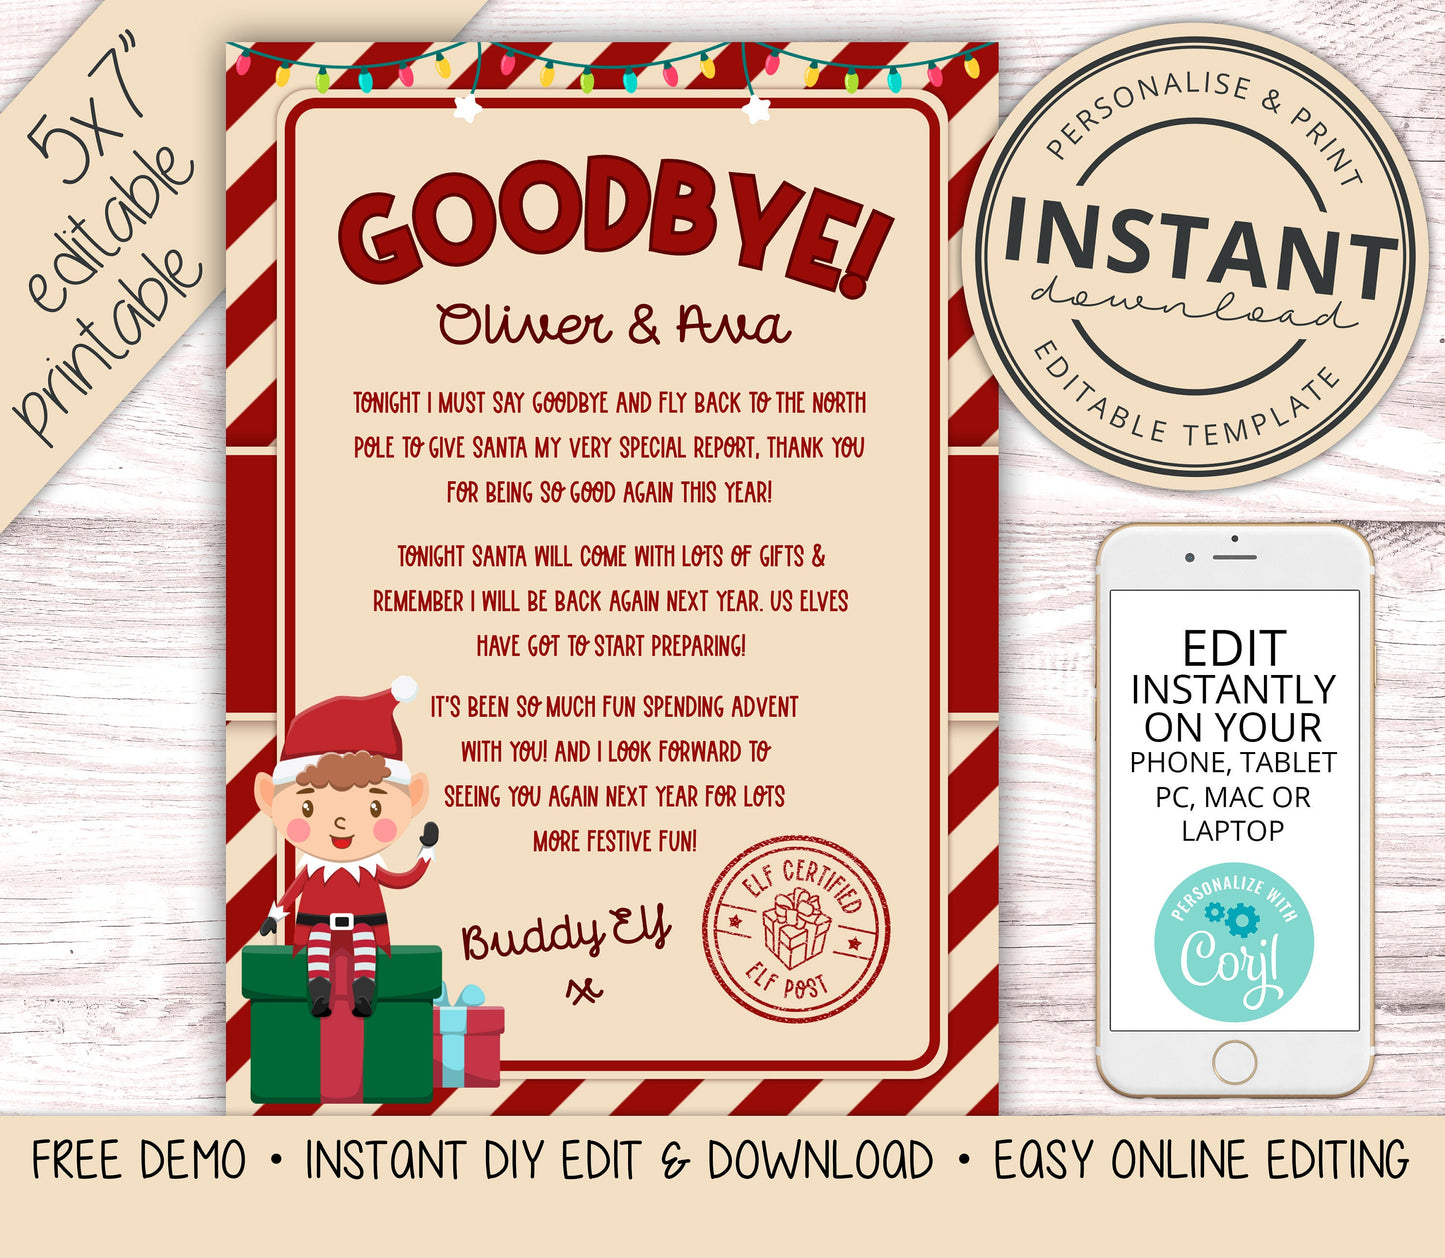 Instant Edit Elf Goodbye Letter PERSONALIZED Instant Download DIY Editing Elf Bye Letter Elf Prop Ideas Elf Activity Elf Kit - PR0424